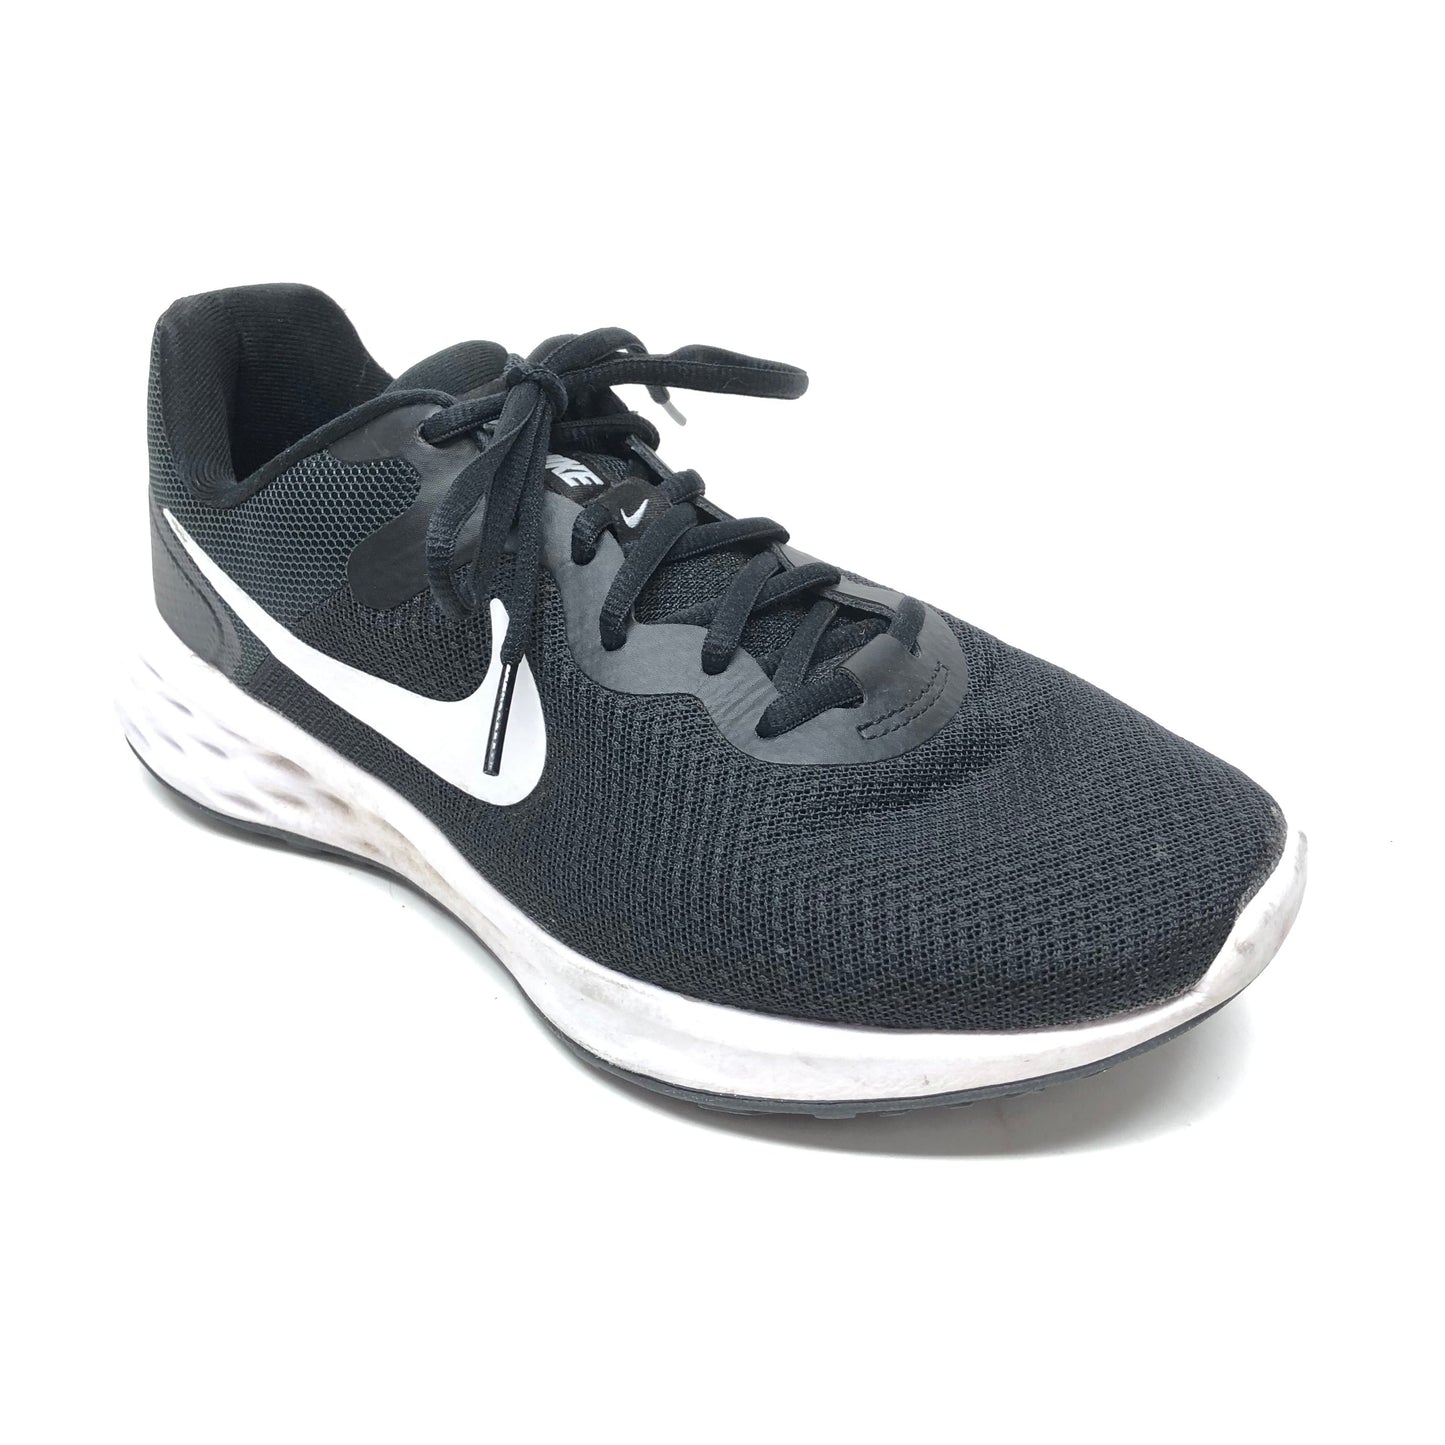 Black & White Shoes Athletic Nike Apparel, Size 10